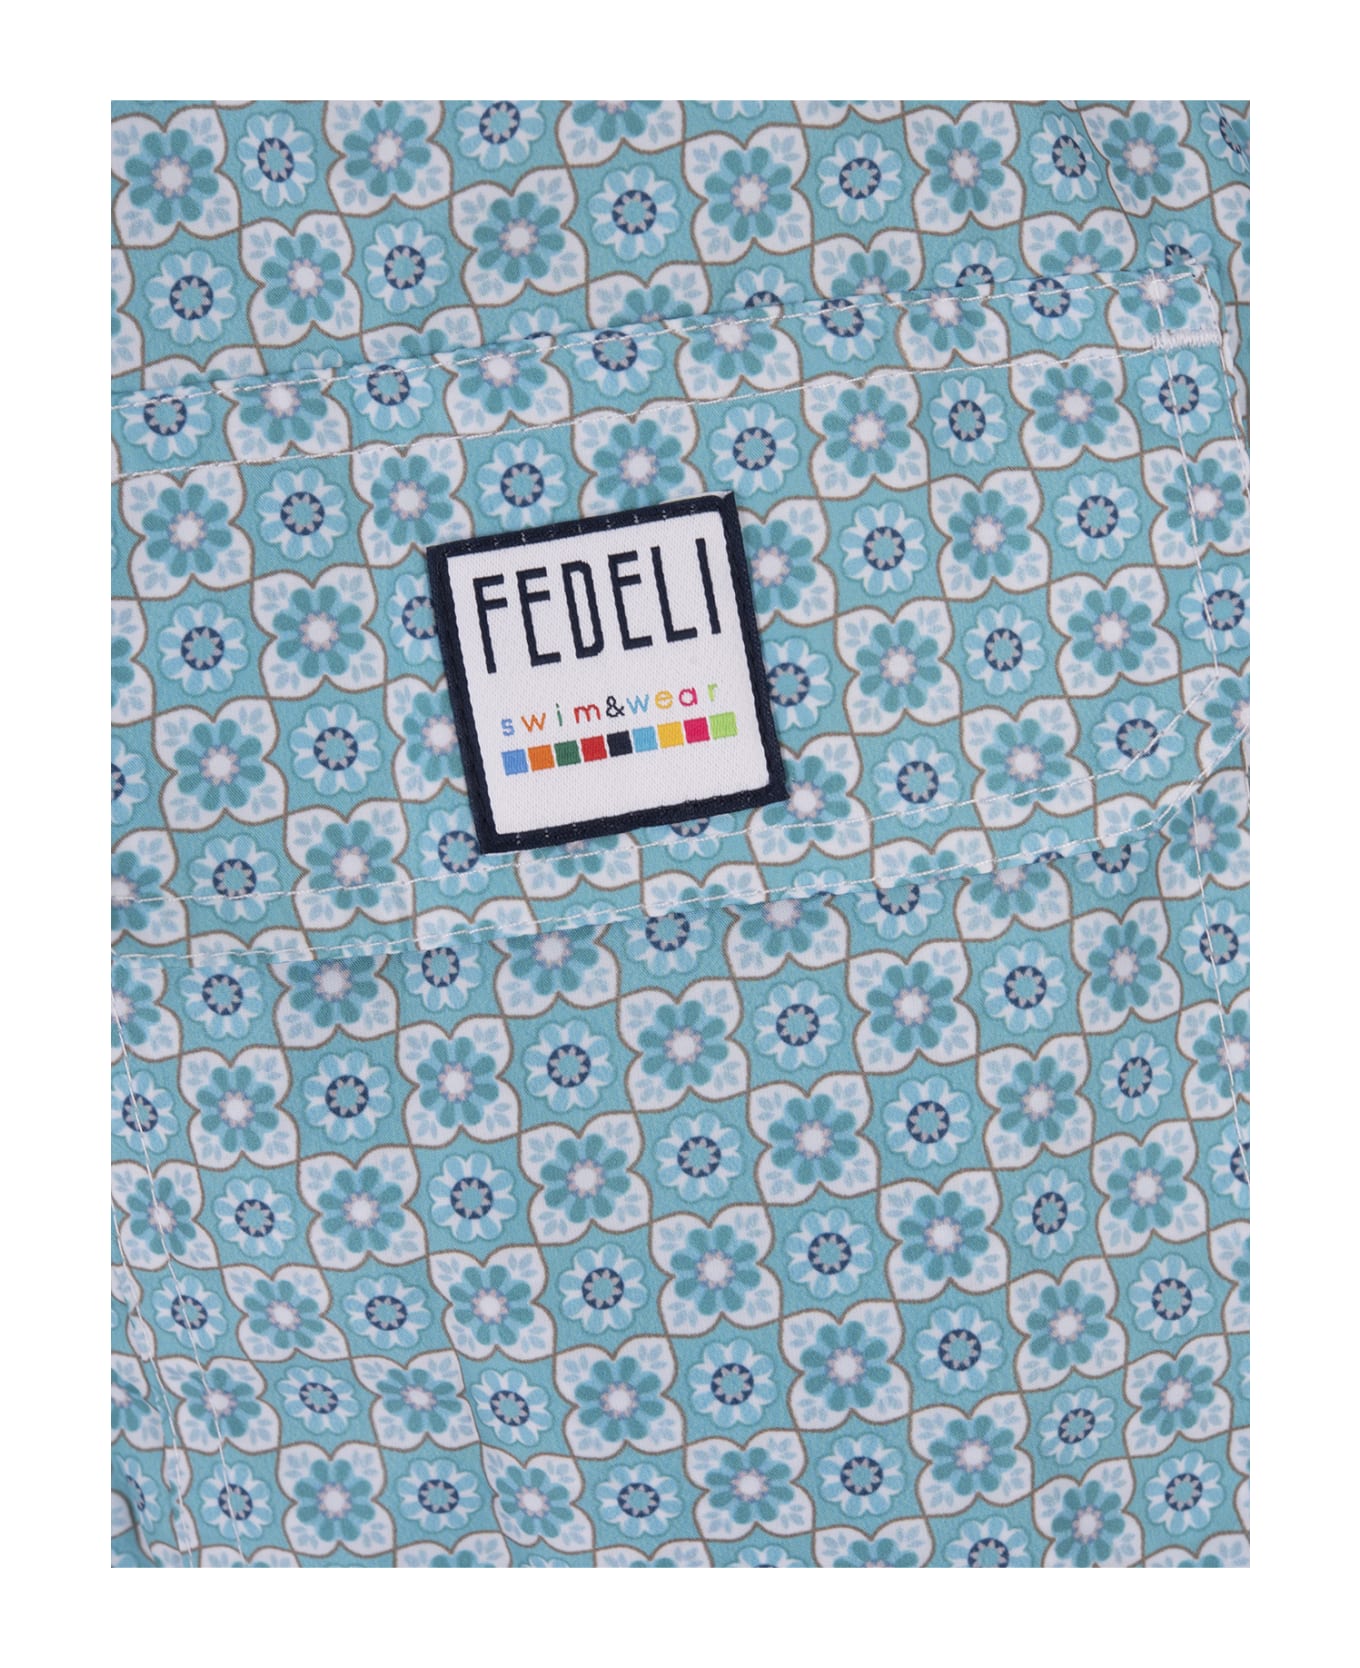 Fedeli Turquoise Swim Shorts With Flower Pattern - Blue